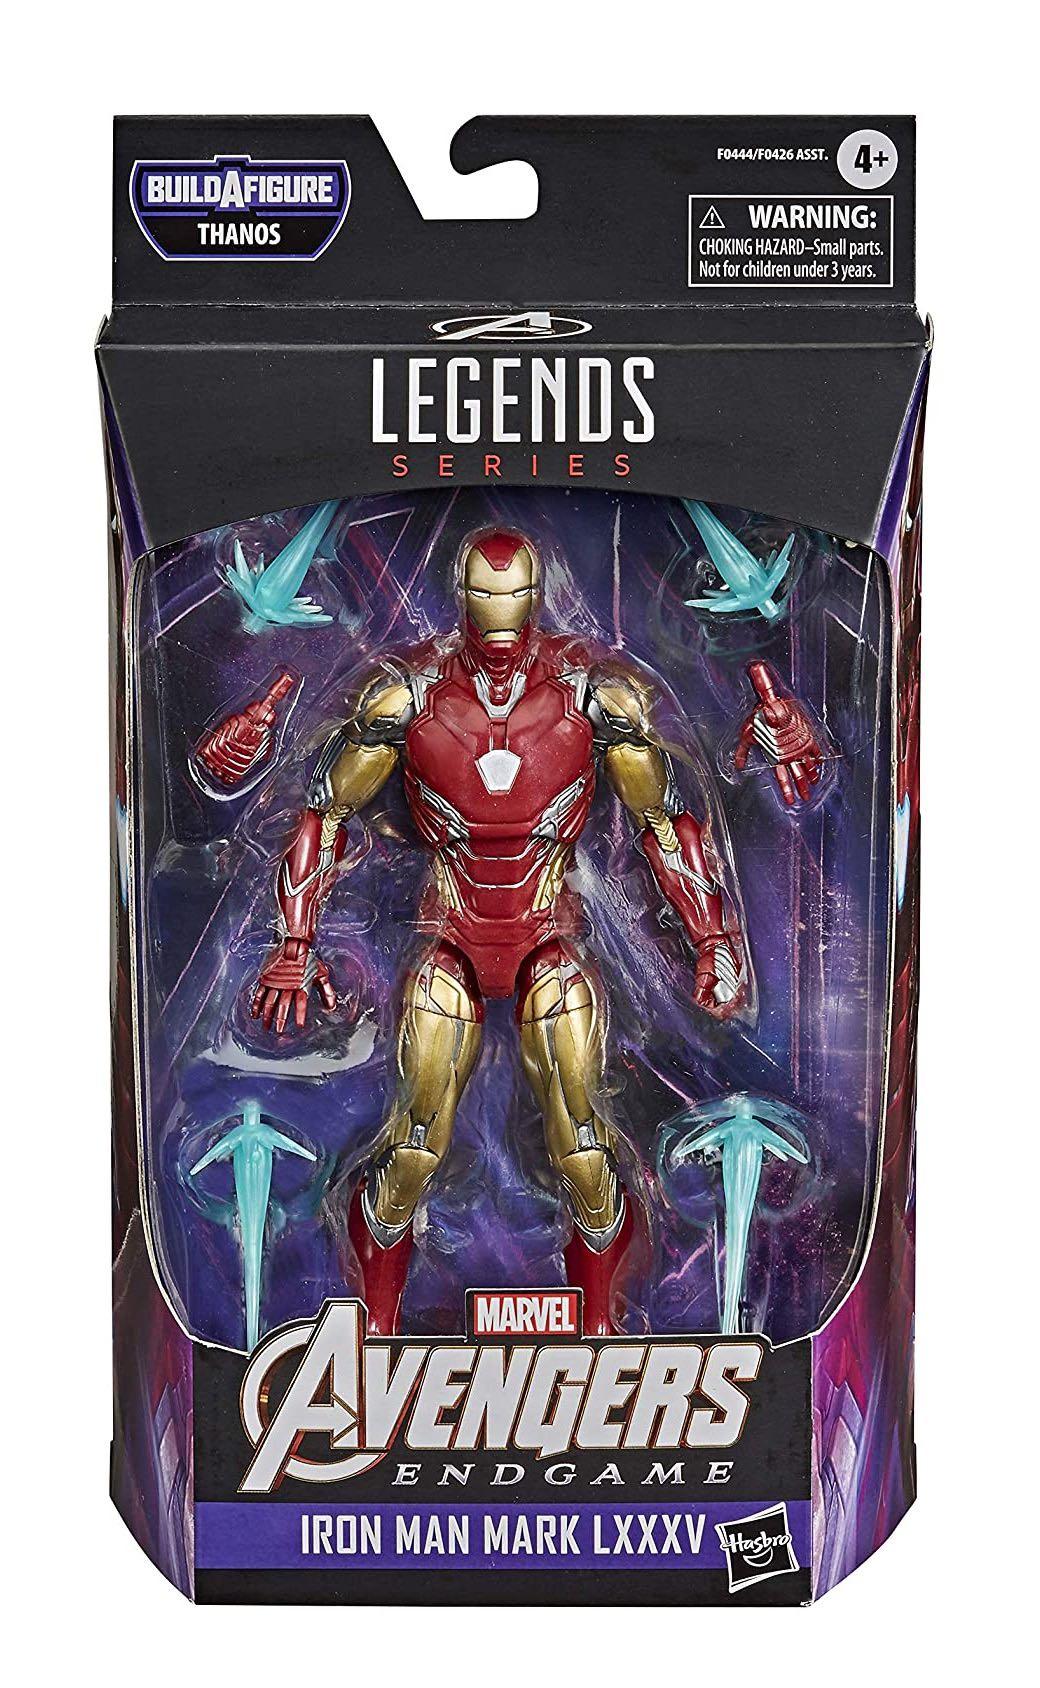 Avengers Endgame – Figurine Iron Man Mark 85 Marvel Select Figure